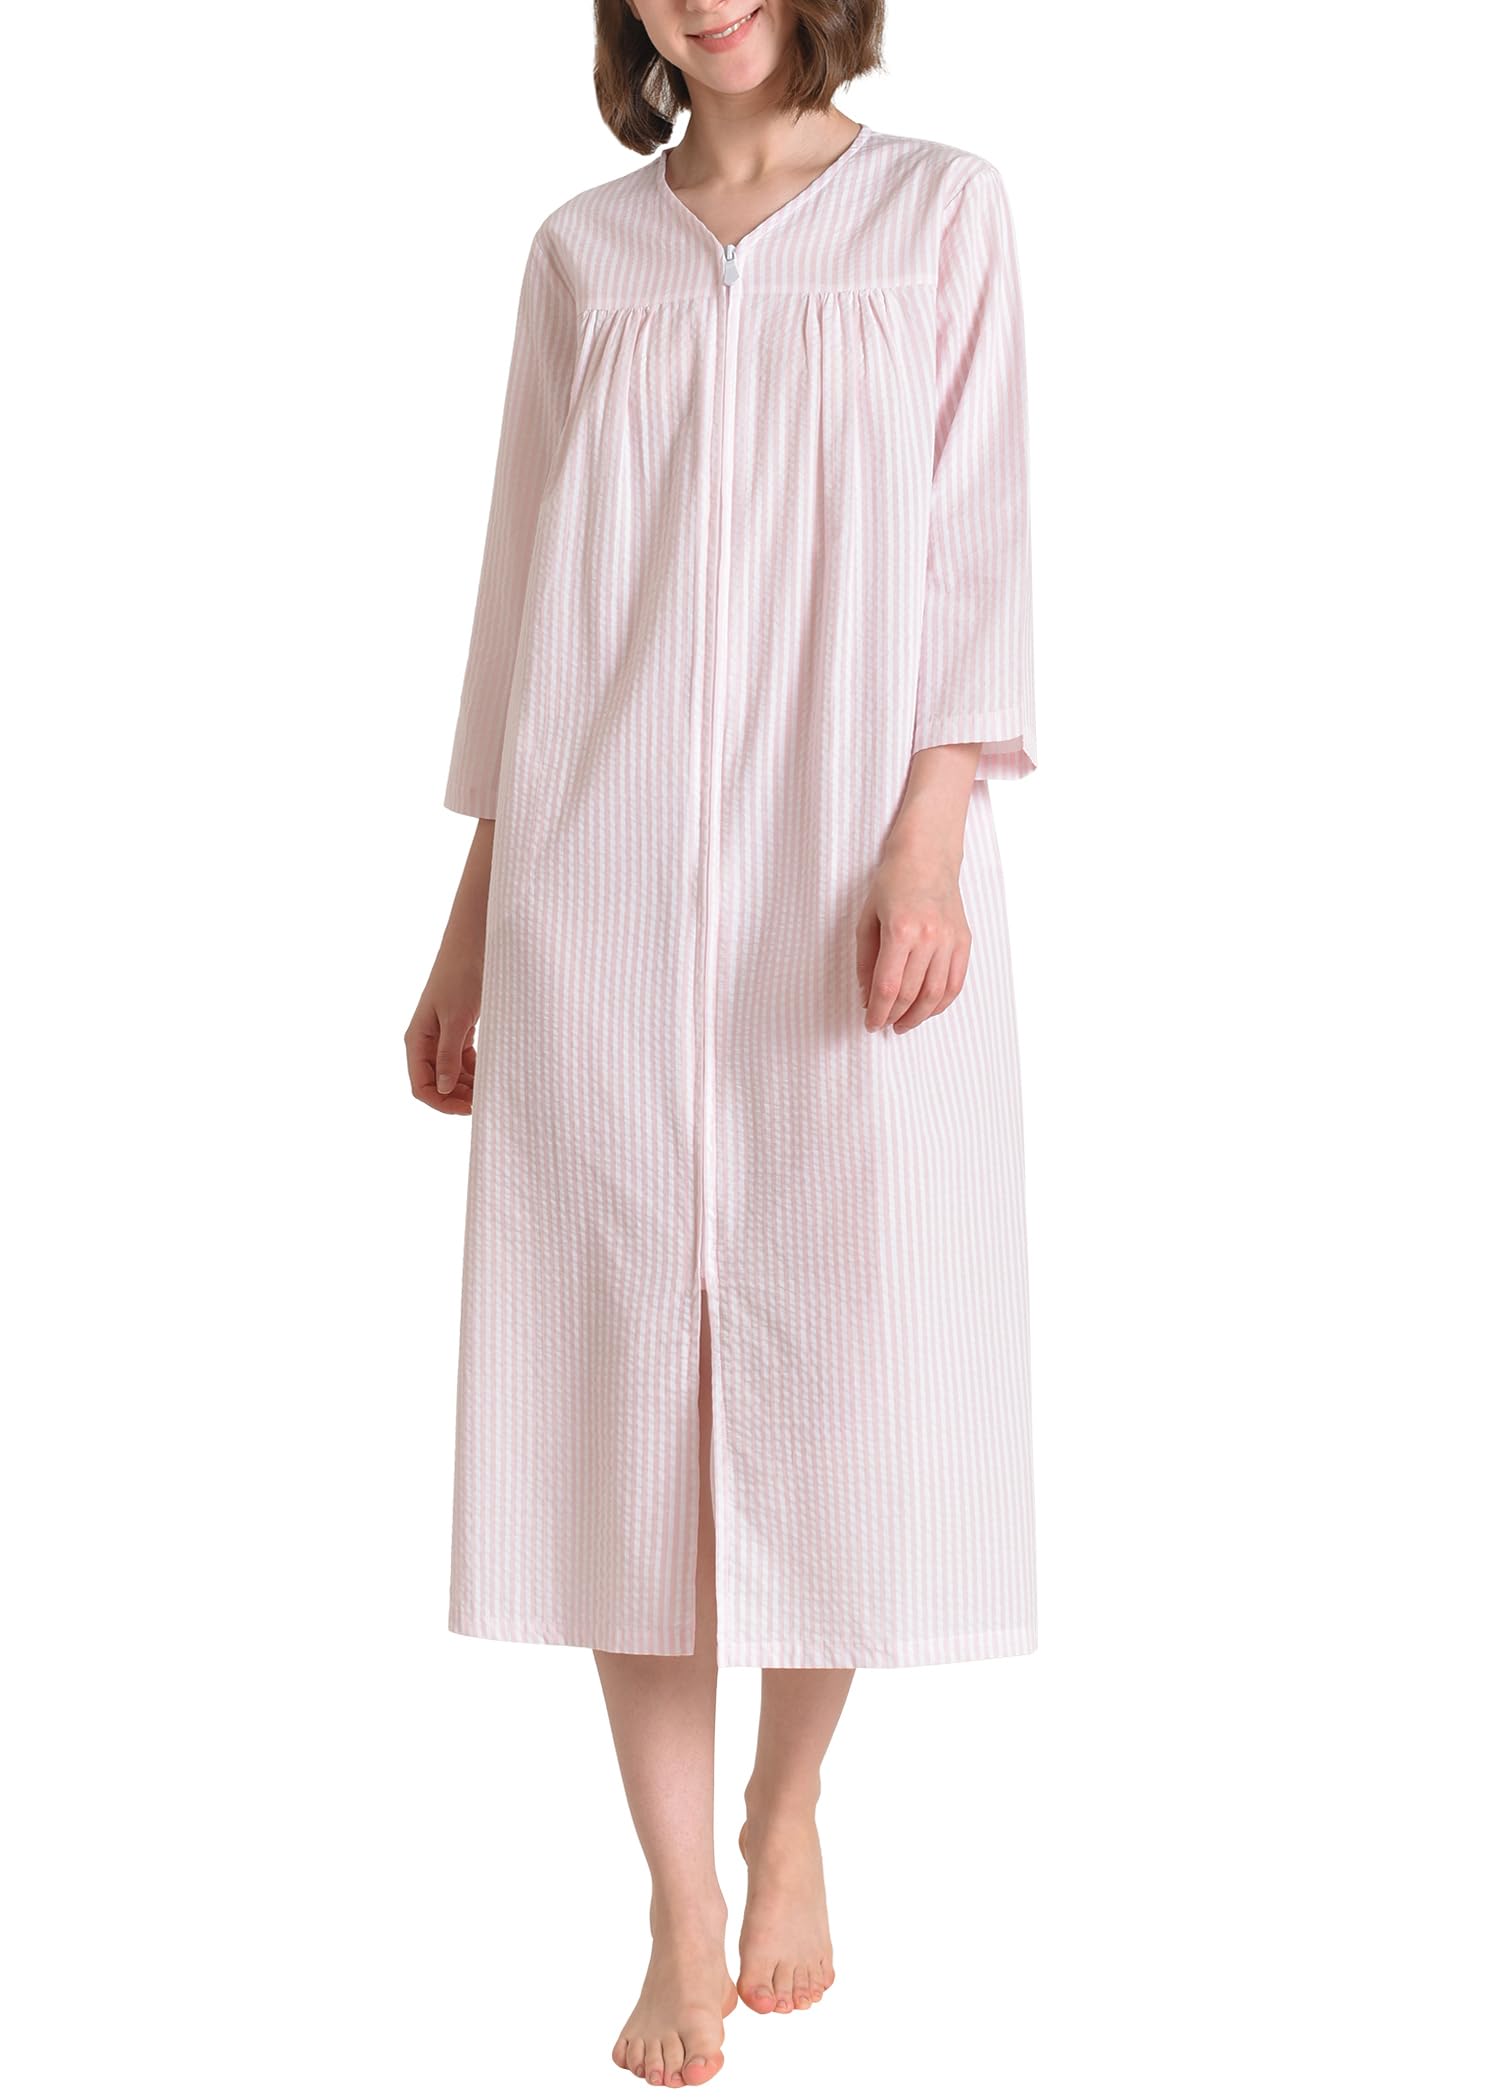 Women's Cotton Zip Up Robe 3/4 Sleeves Housecoat Long Duster with Pockets - Latuza